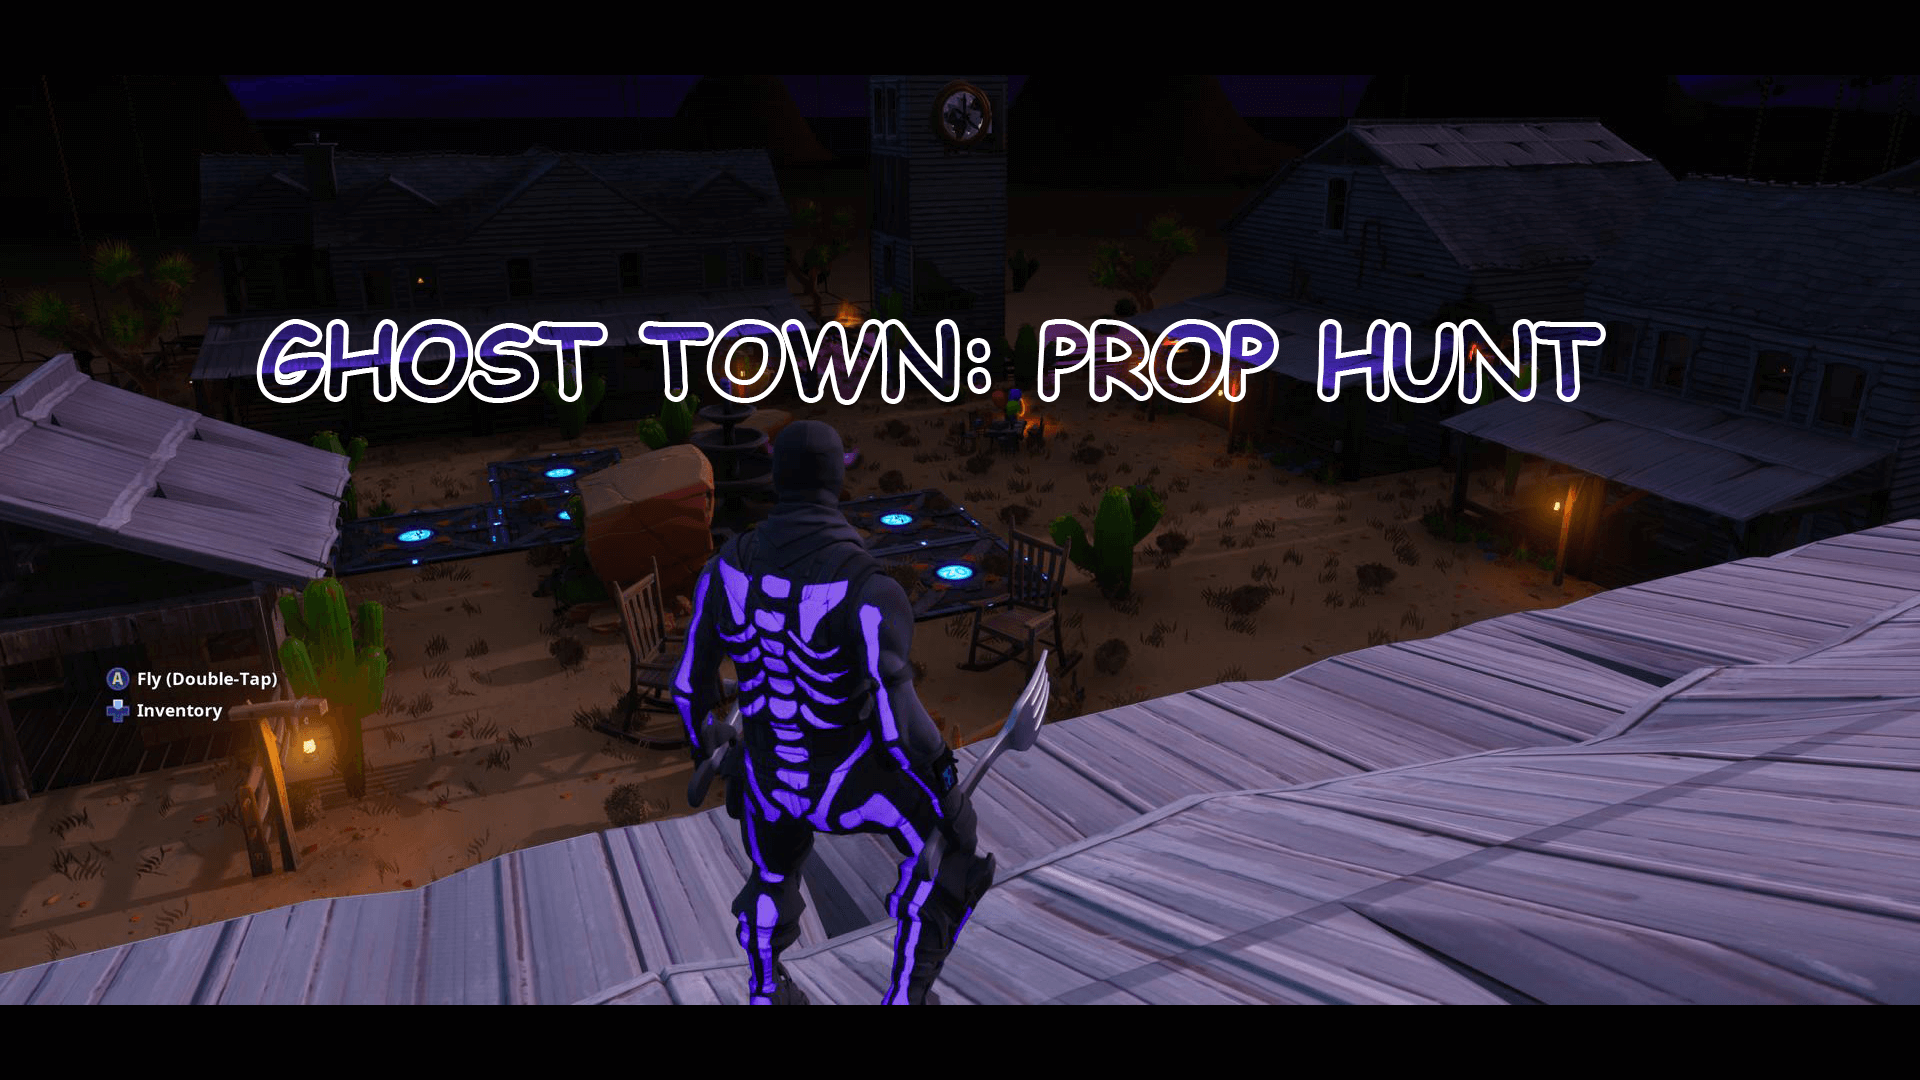 GHOST TOWN: PROP HUNT